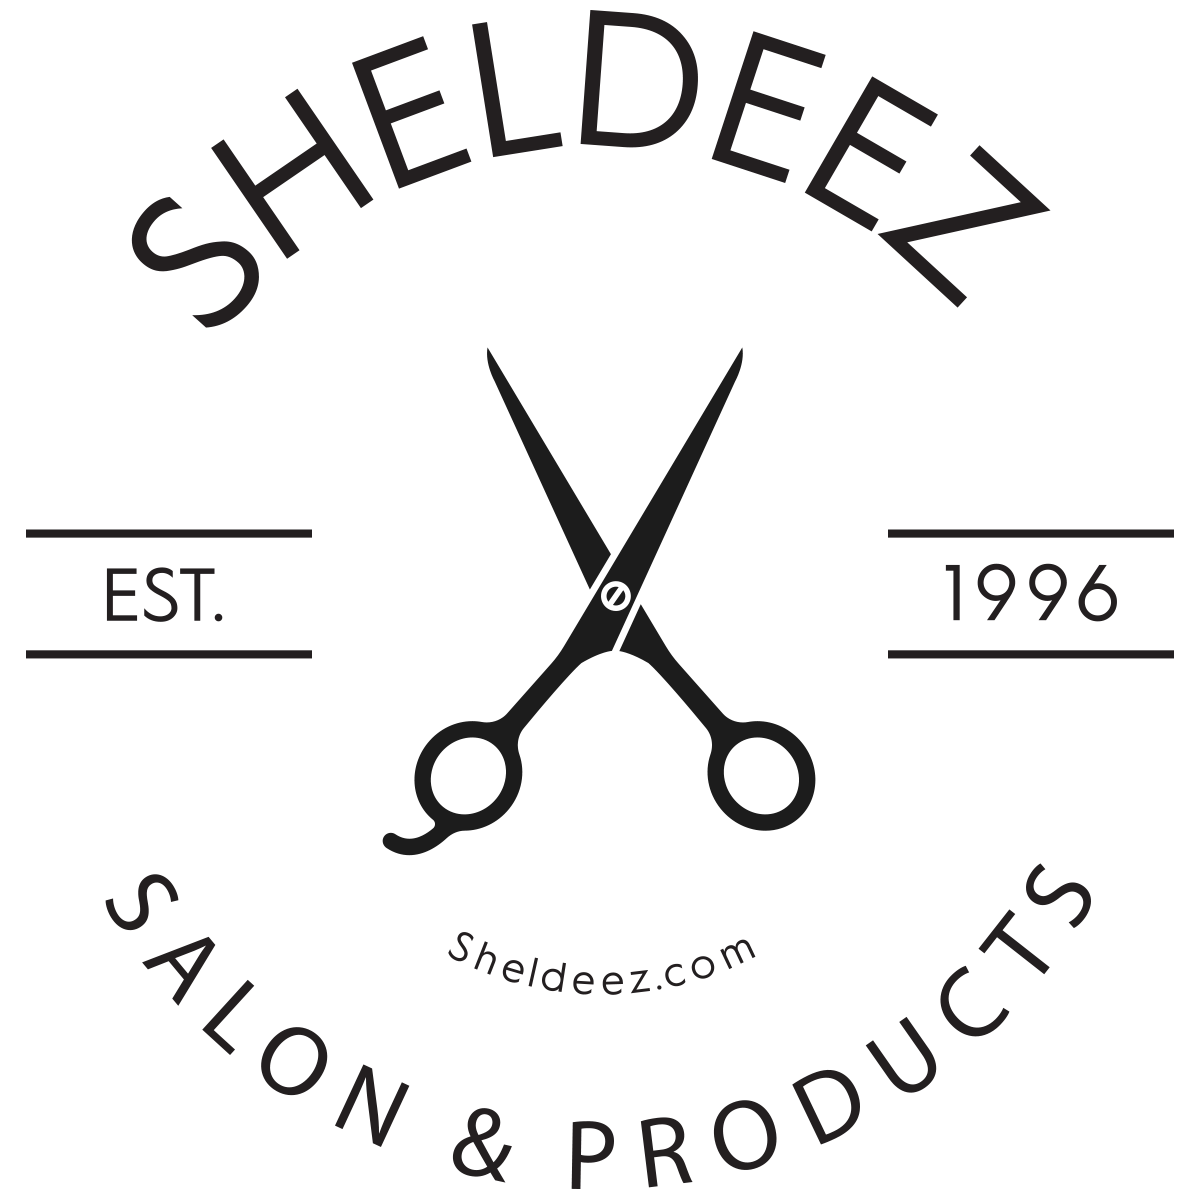 www.sheldeez.com